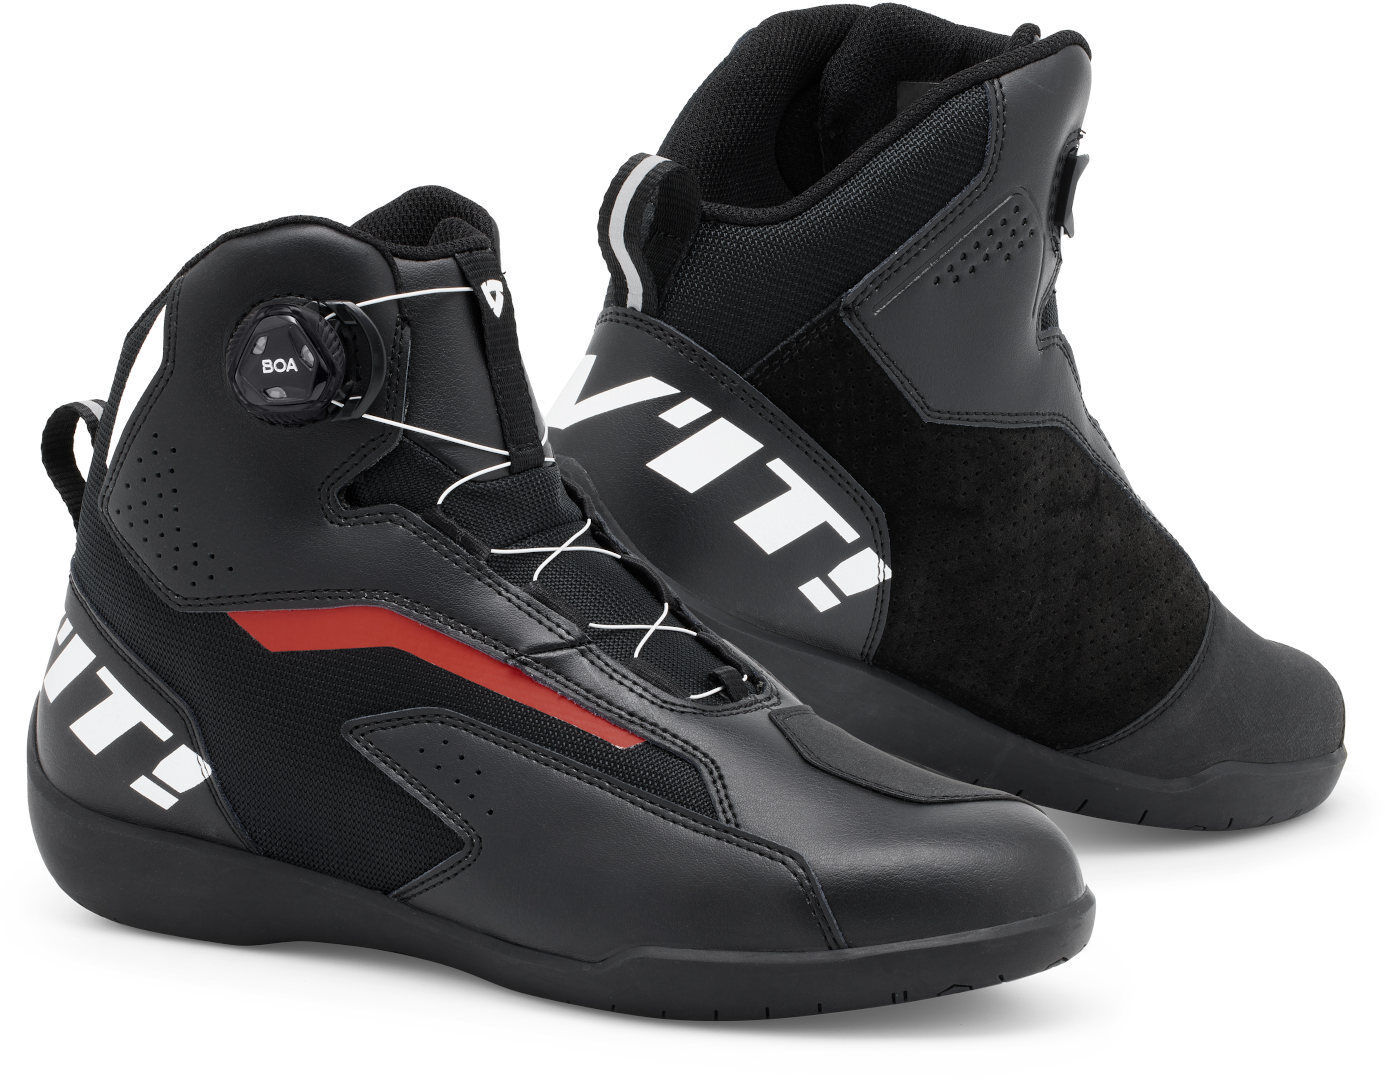 Revit Jetspeed Pro Zapatos de motocicleta - Negro Blanco Rojo (39)